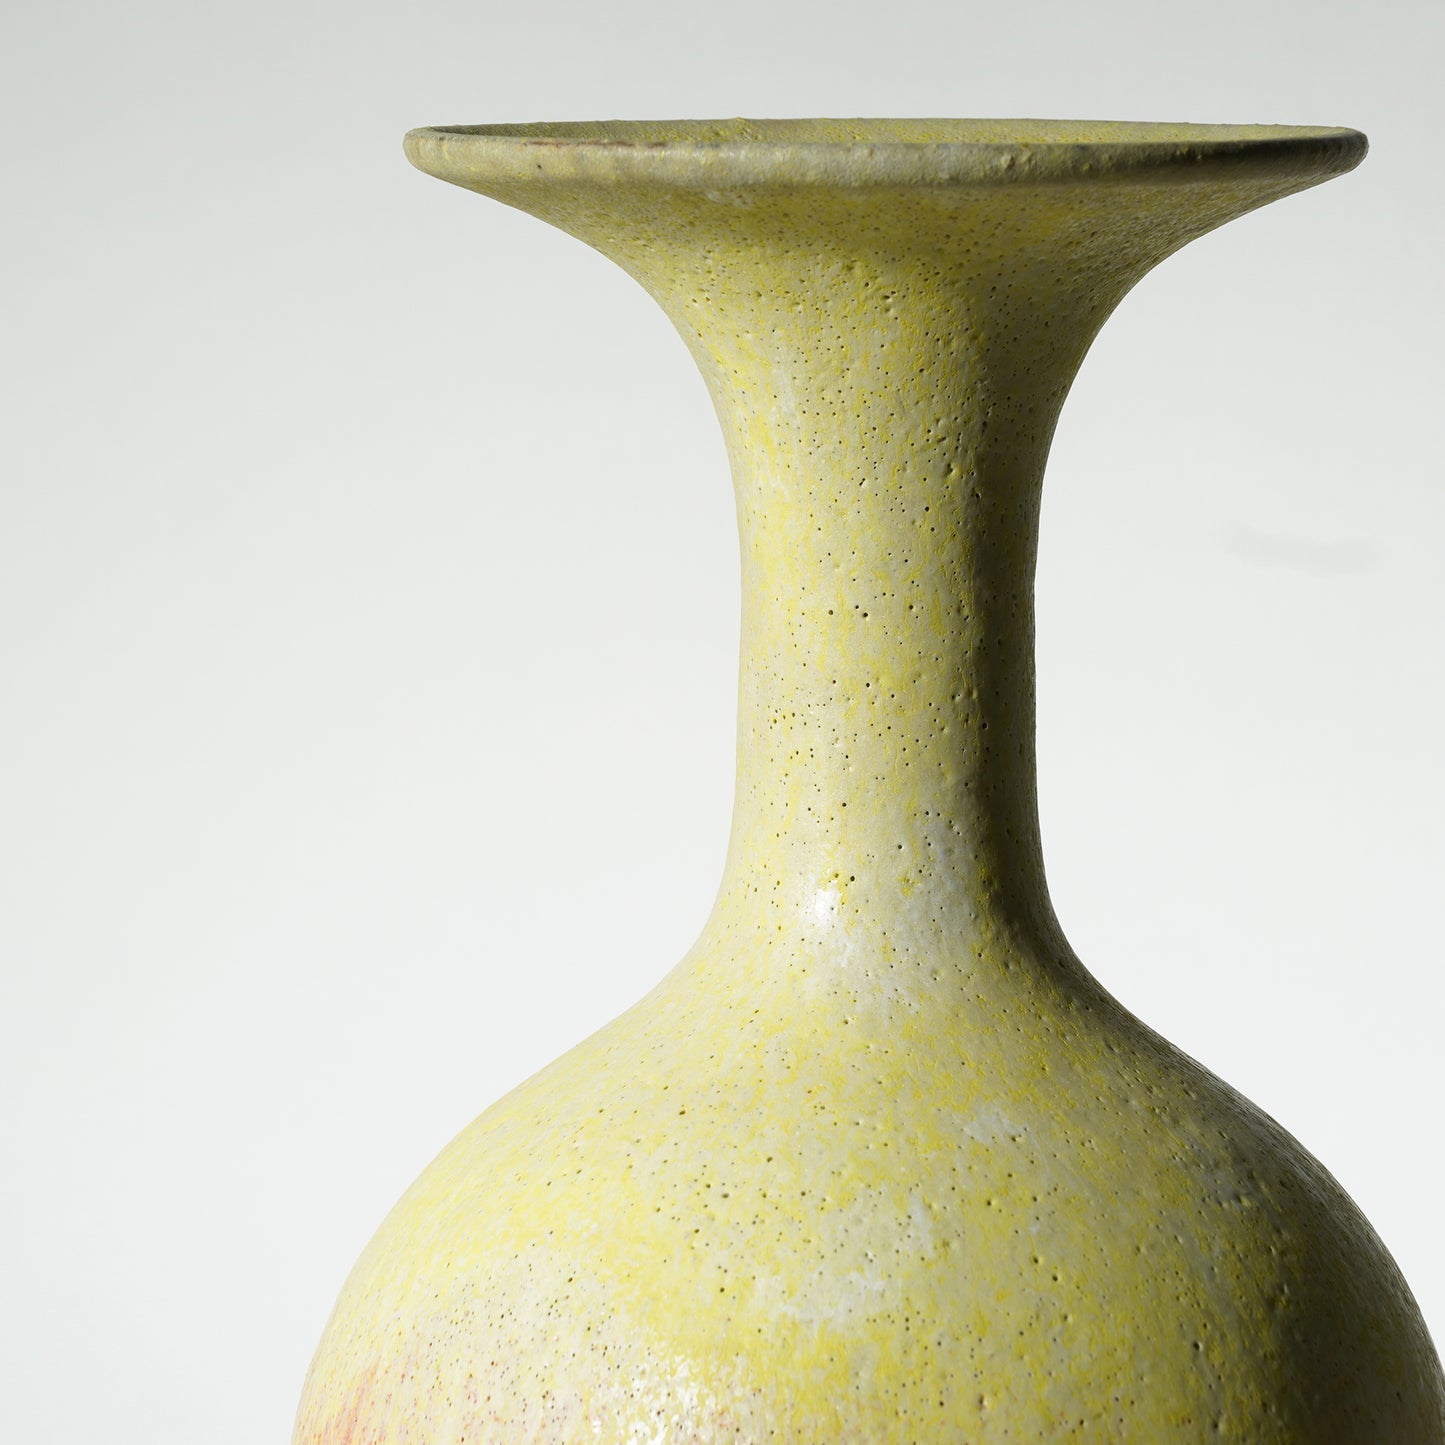 Vaseman Vessel Japan pottery ceramics